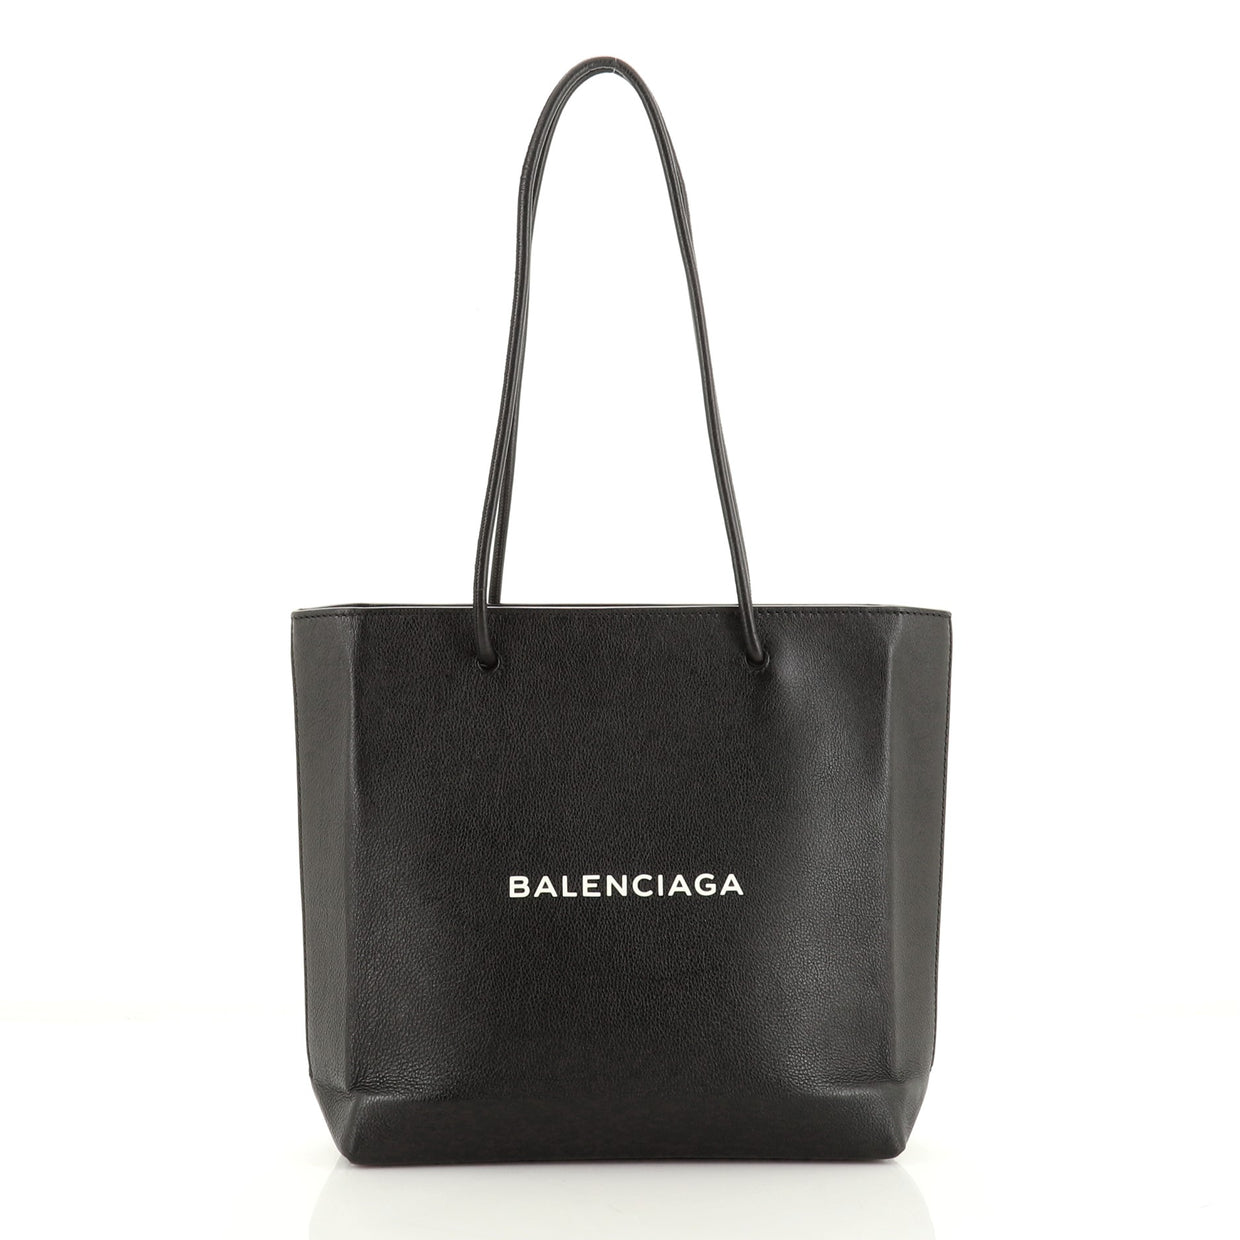 Balenciaga Shopping Tote Leather Medium Black 58342152